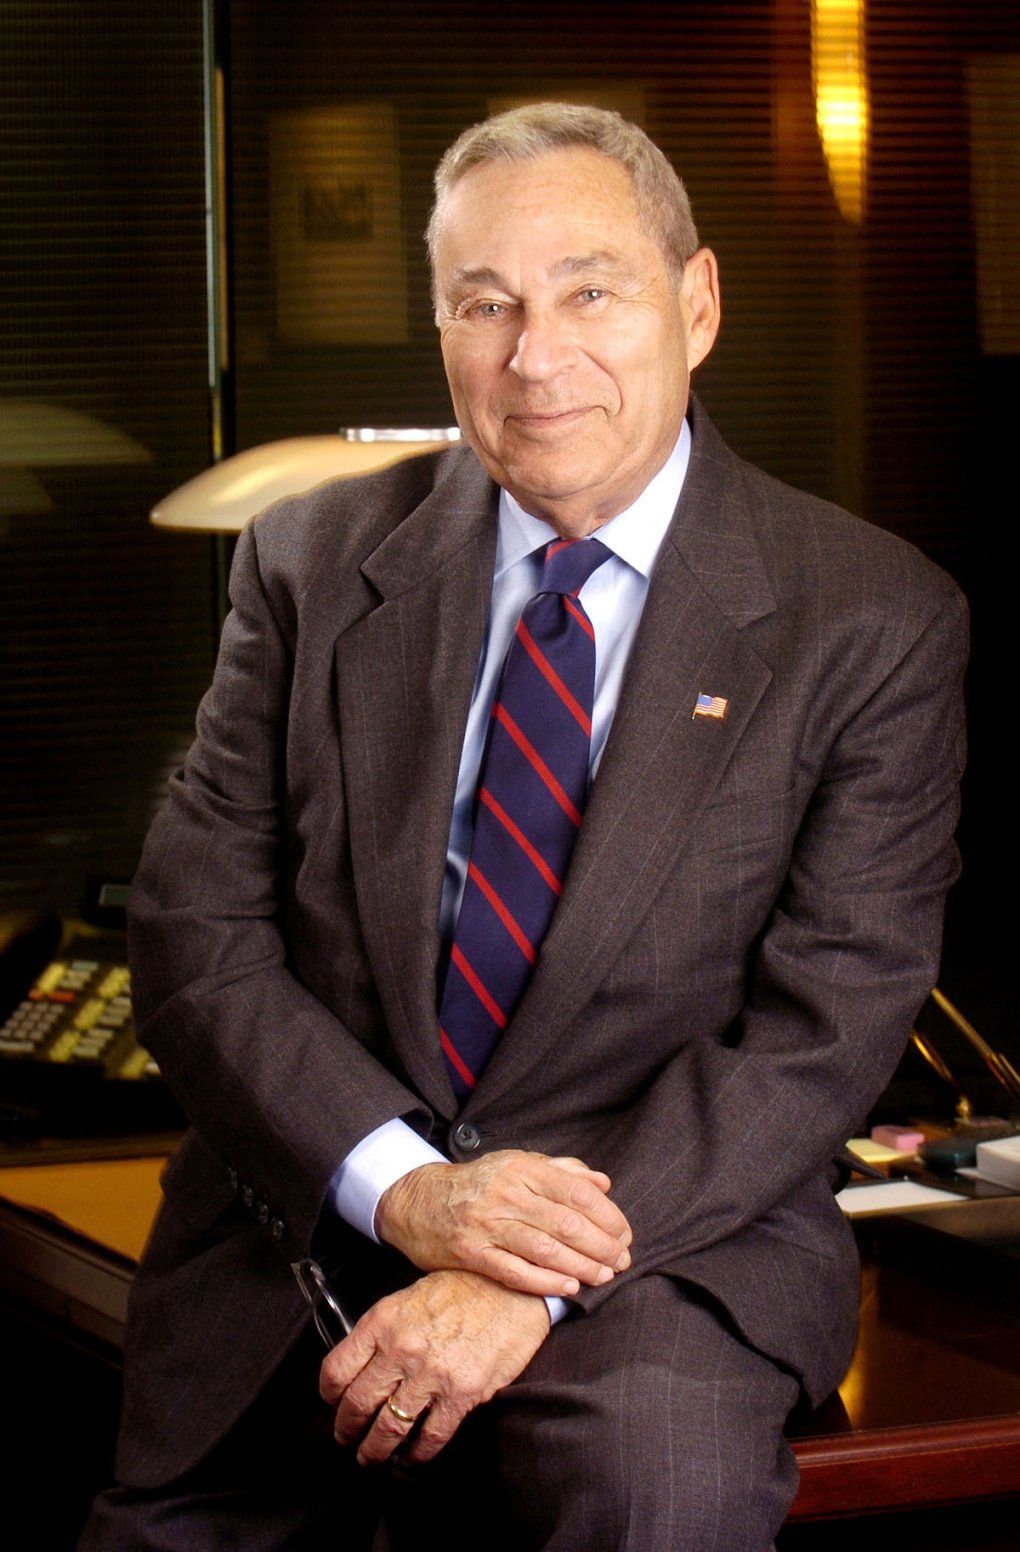 A portrait of Richard Rosenberg wearing a suit